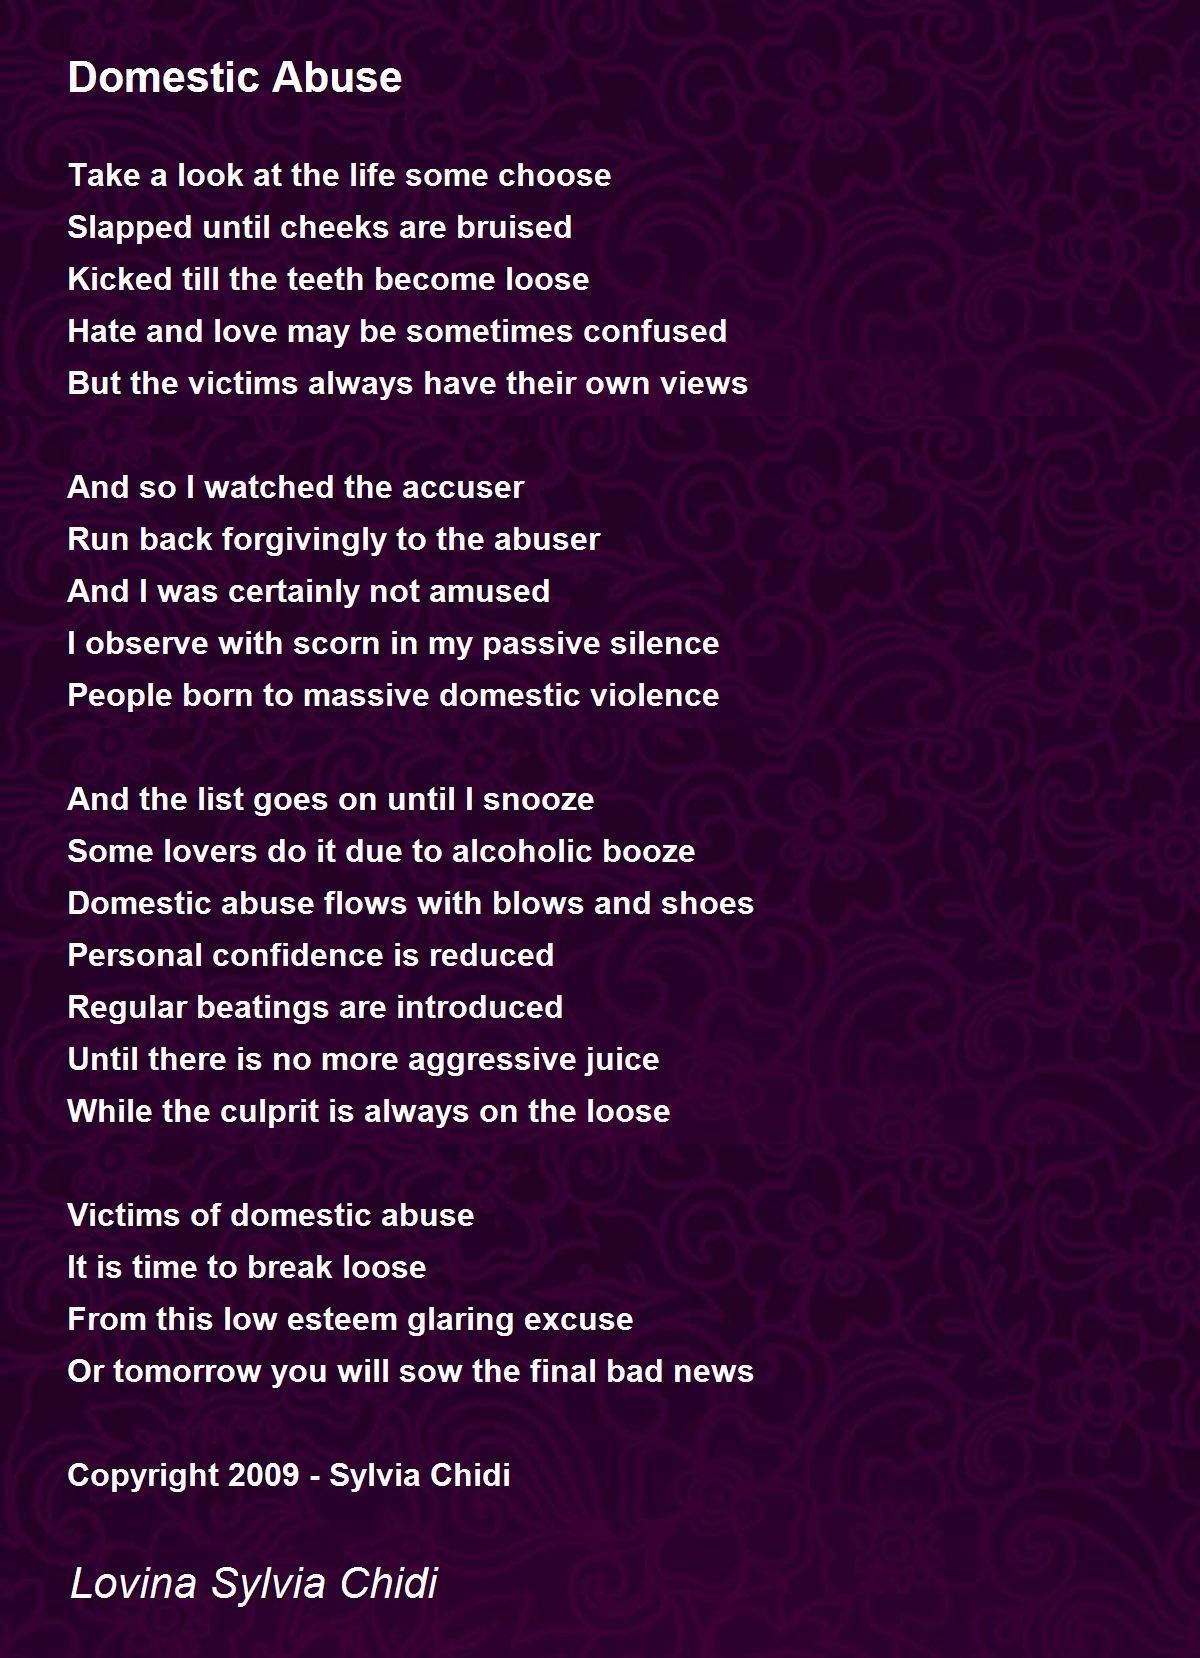 Domestic Abuse Poem By Sylvia Chidi